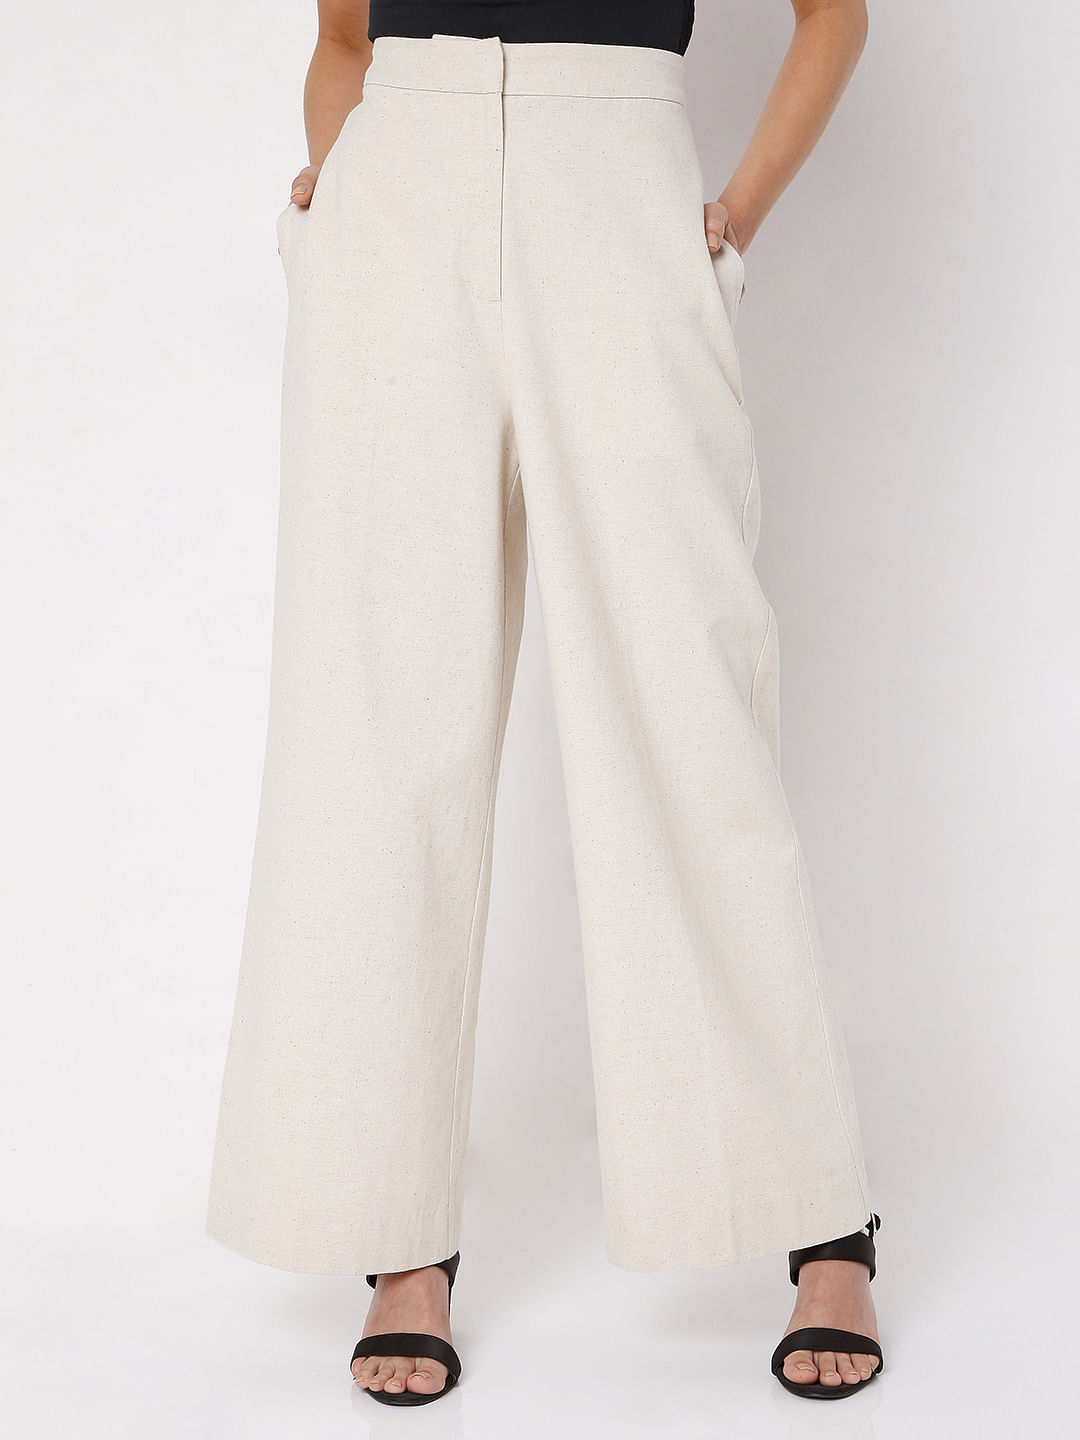 Buy RSVP White Trousers for Women's Online @ Tata CLiQ